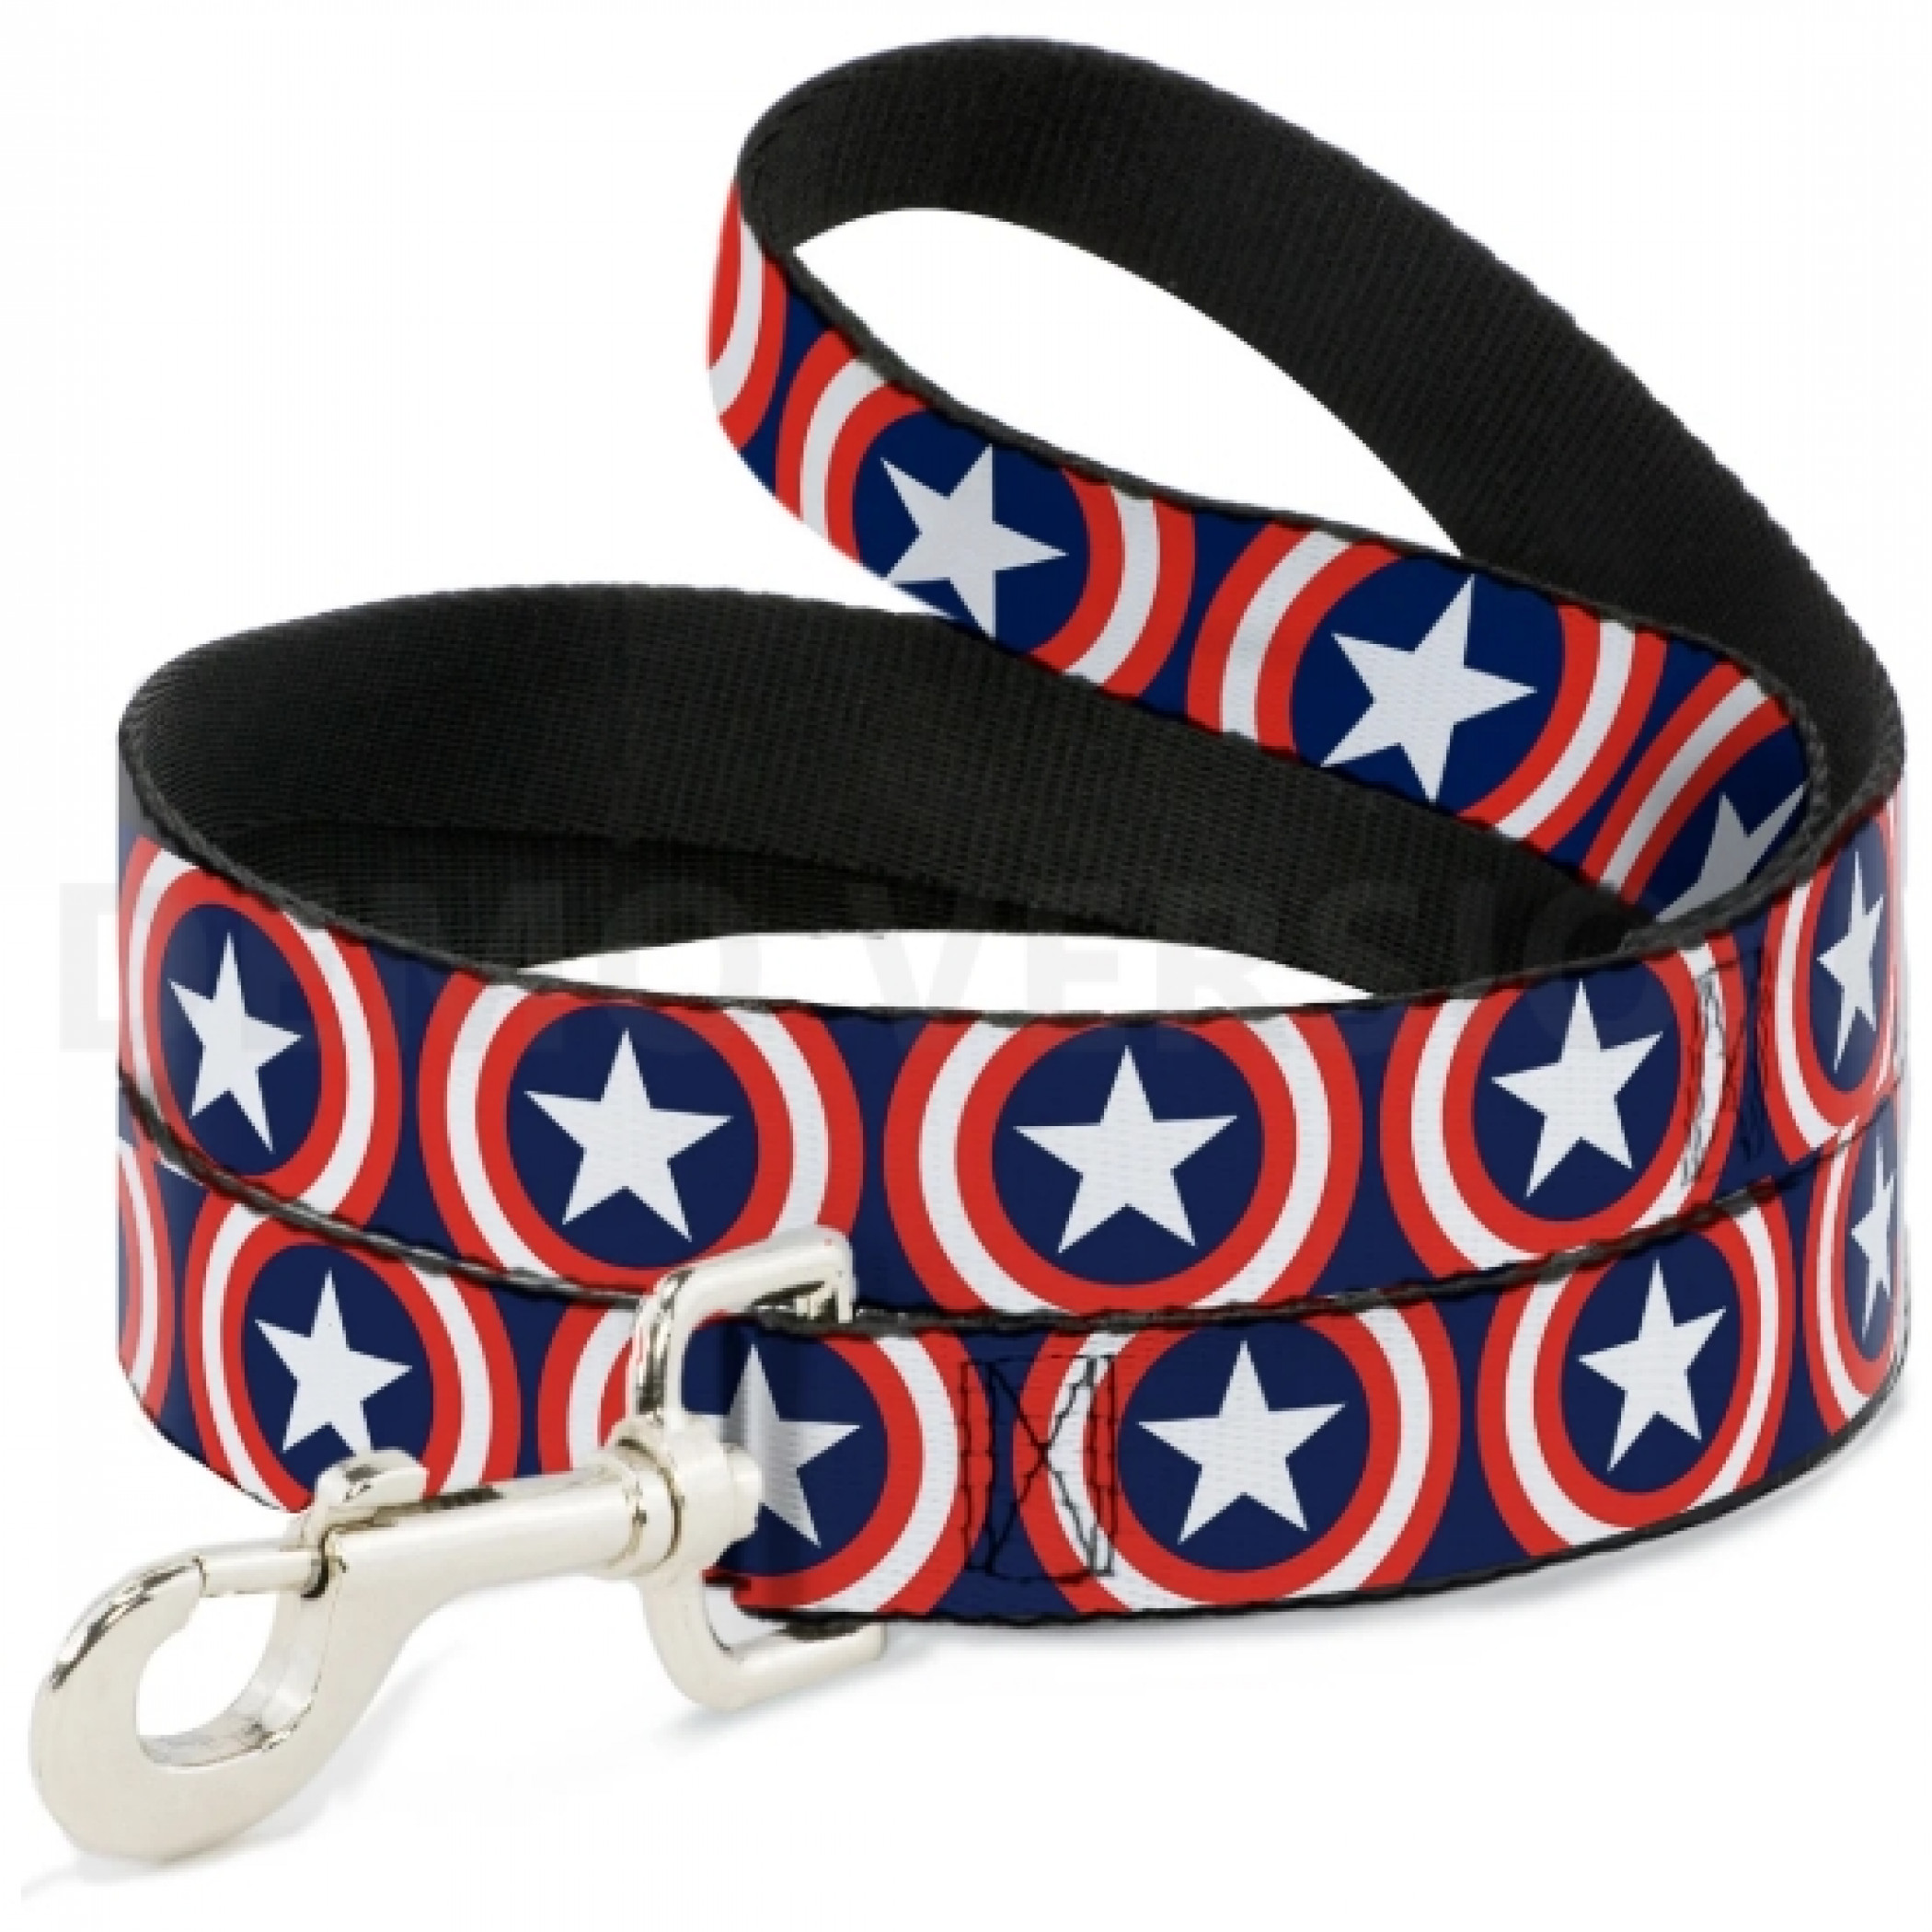 Captain America Logos 4-Foot Dog Leash